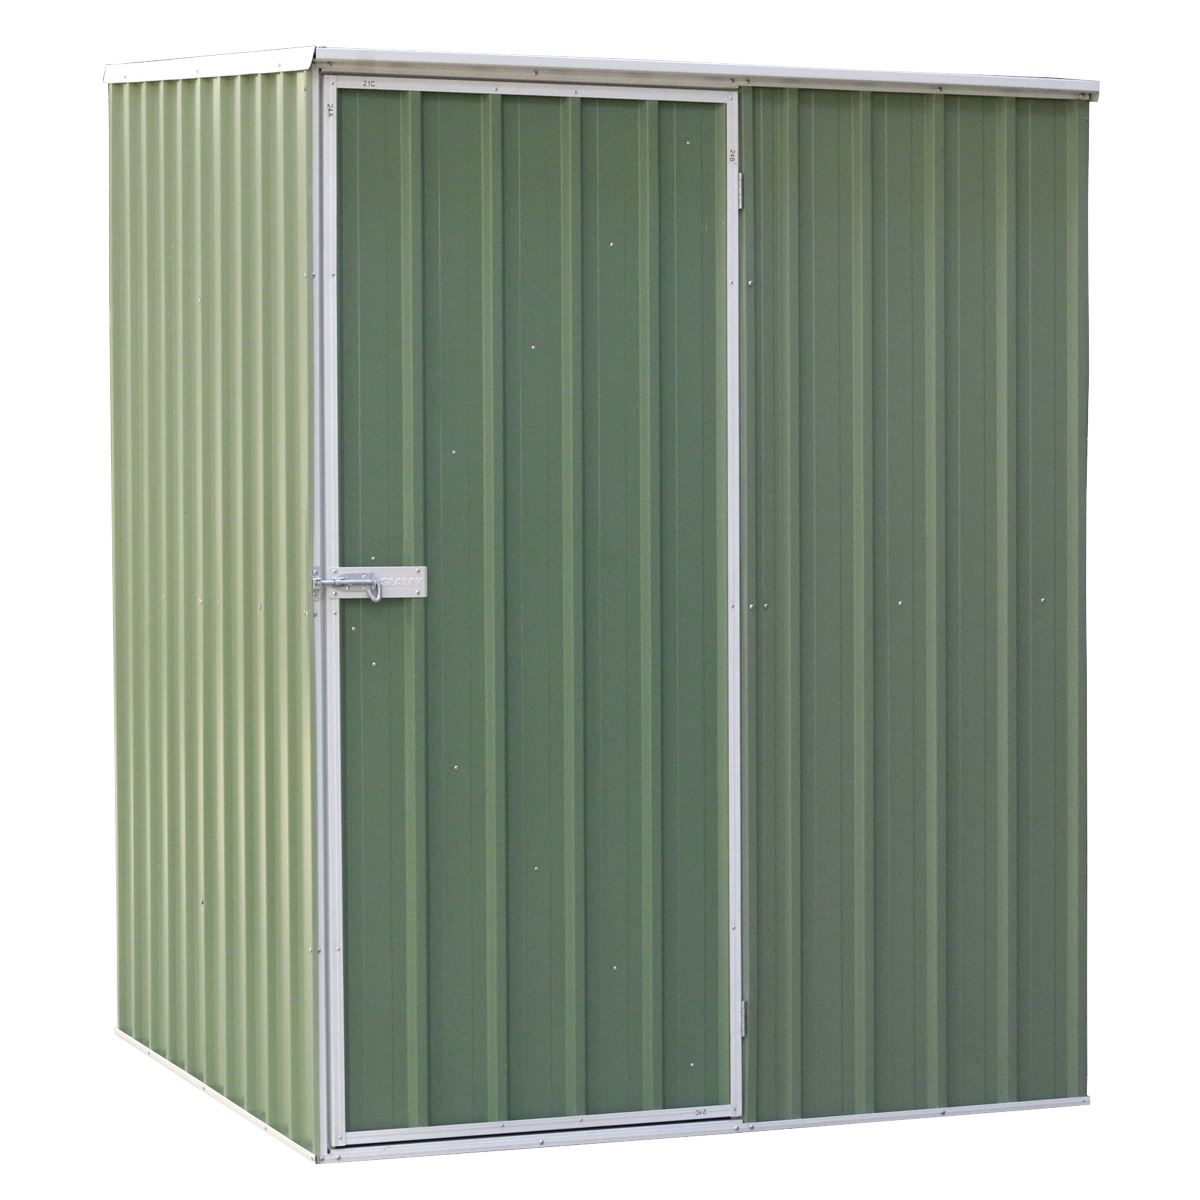 Dellonda Galvanised Steel Metal Garden/Outdoor/Storage Shed, 5FT x 5FT, Pent Style Roof – Green